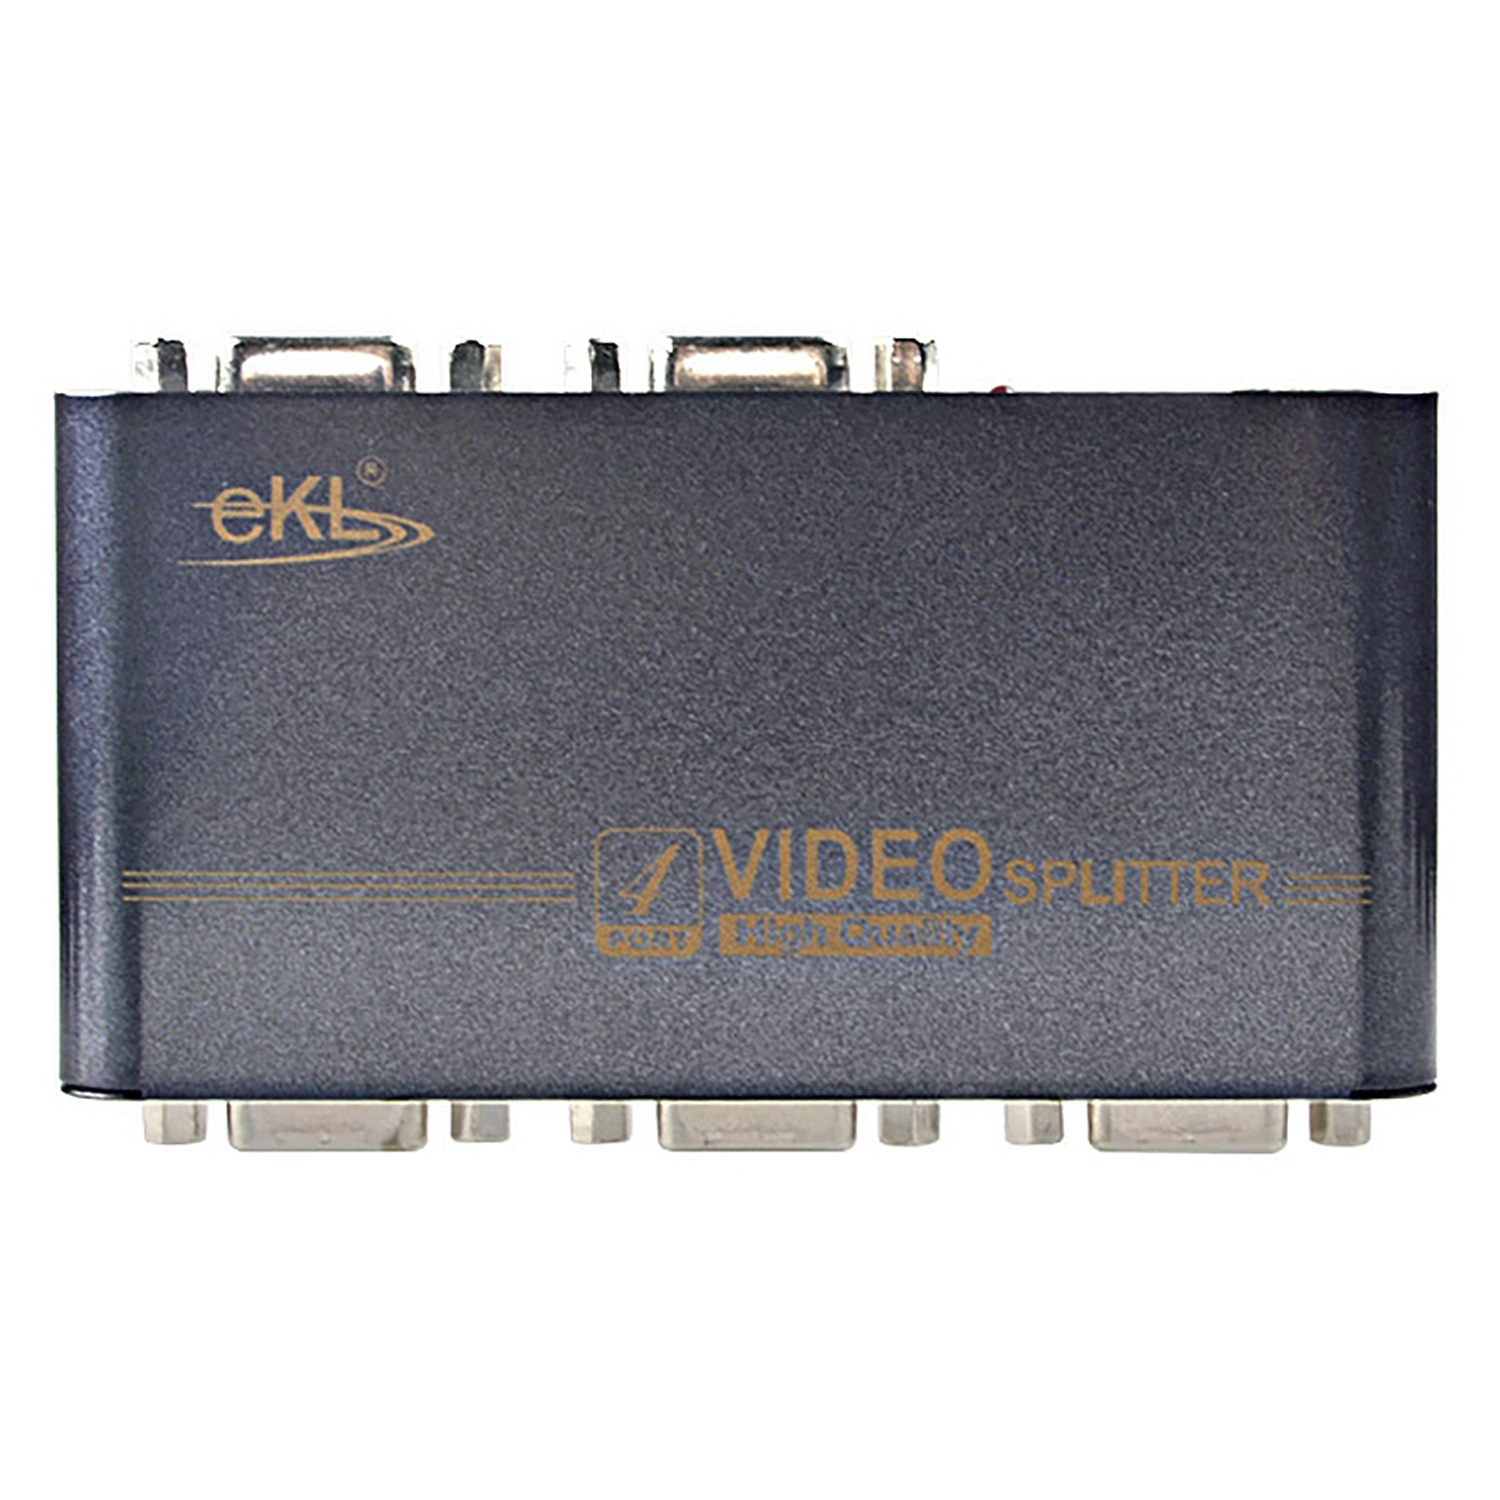 Video Splitter HLD 4 Portas VGA EKL-94 / 350MHz / 1920x1440@60Hz
